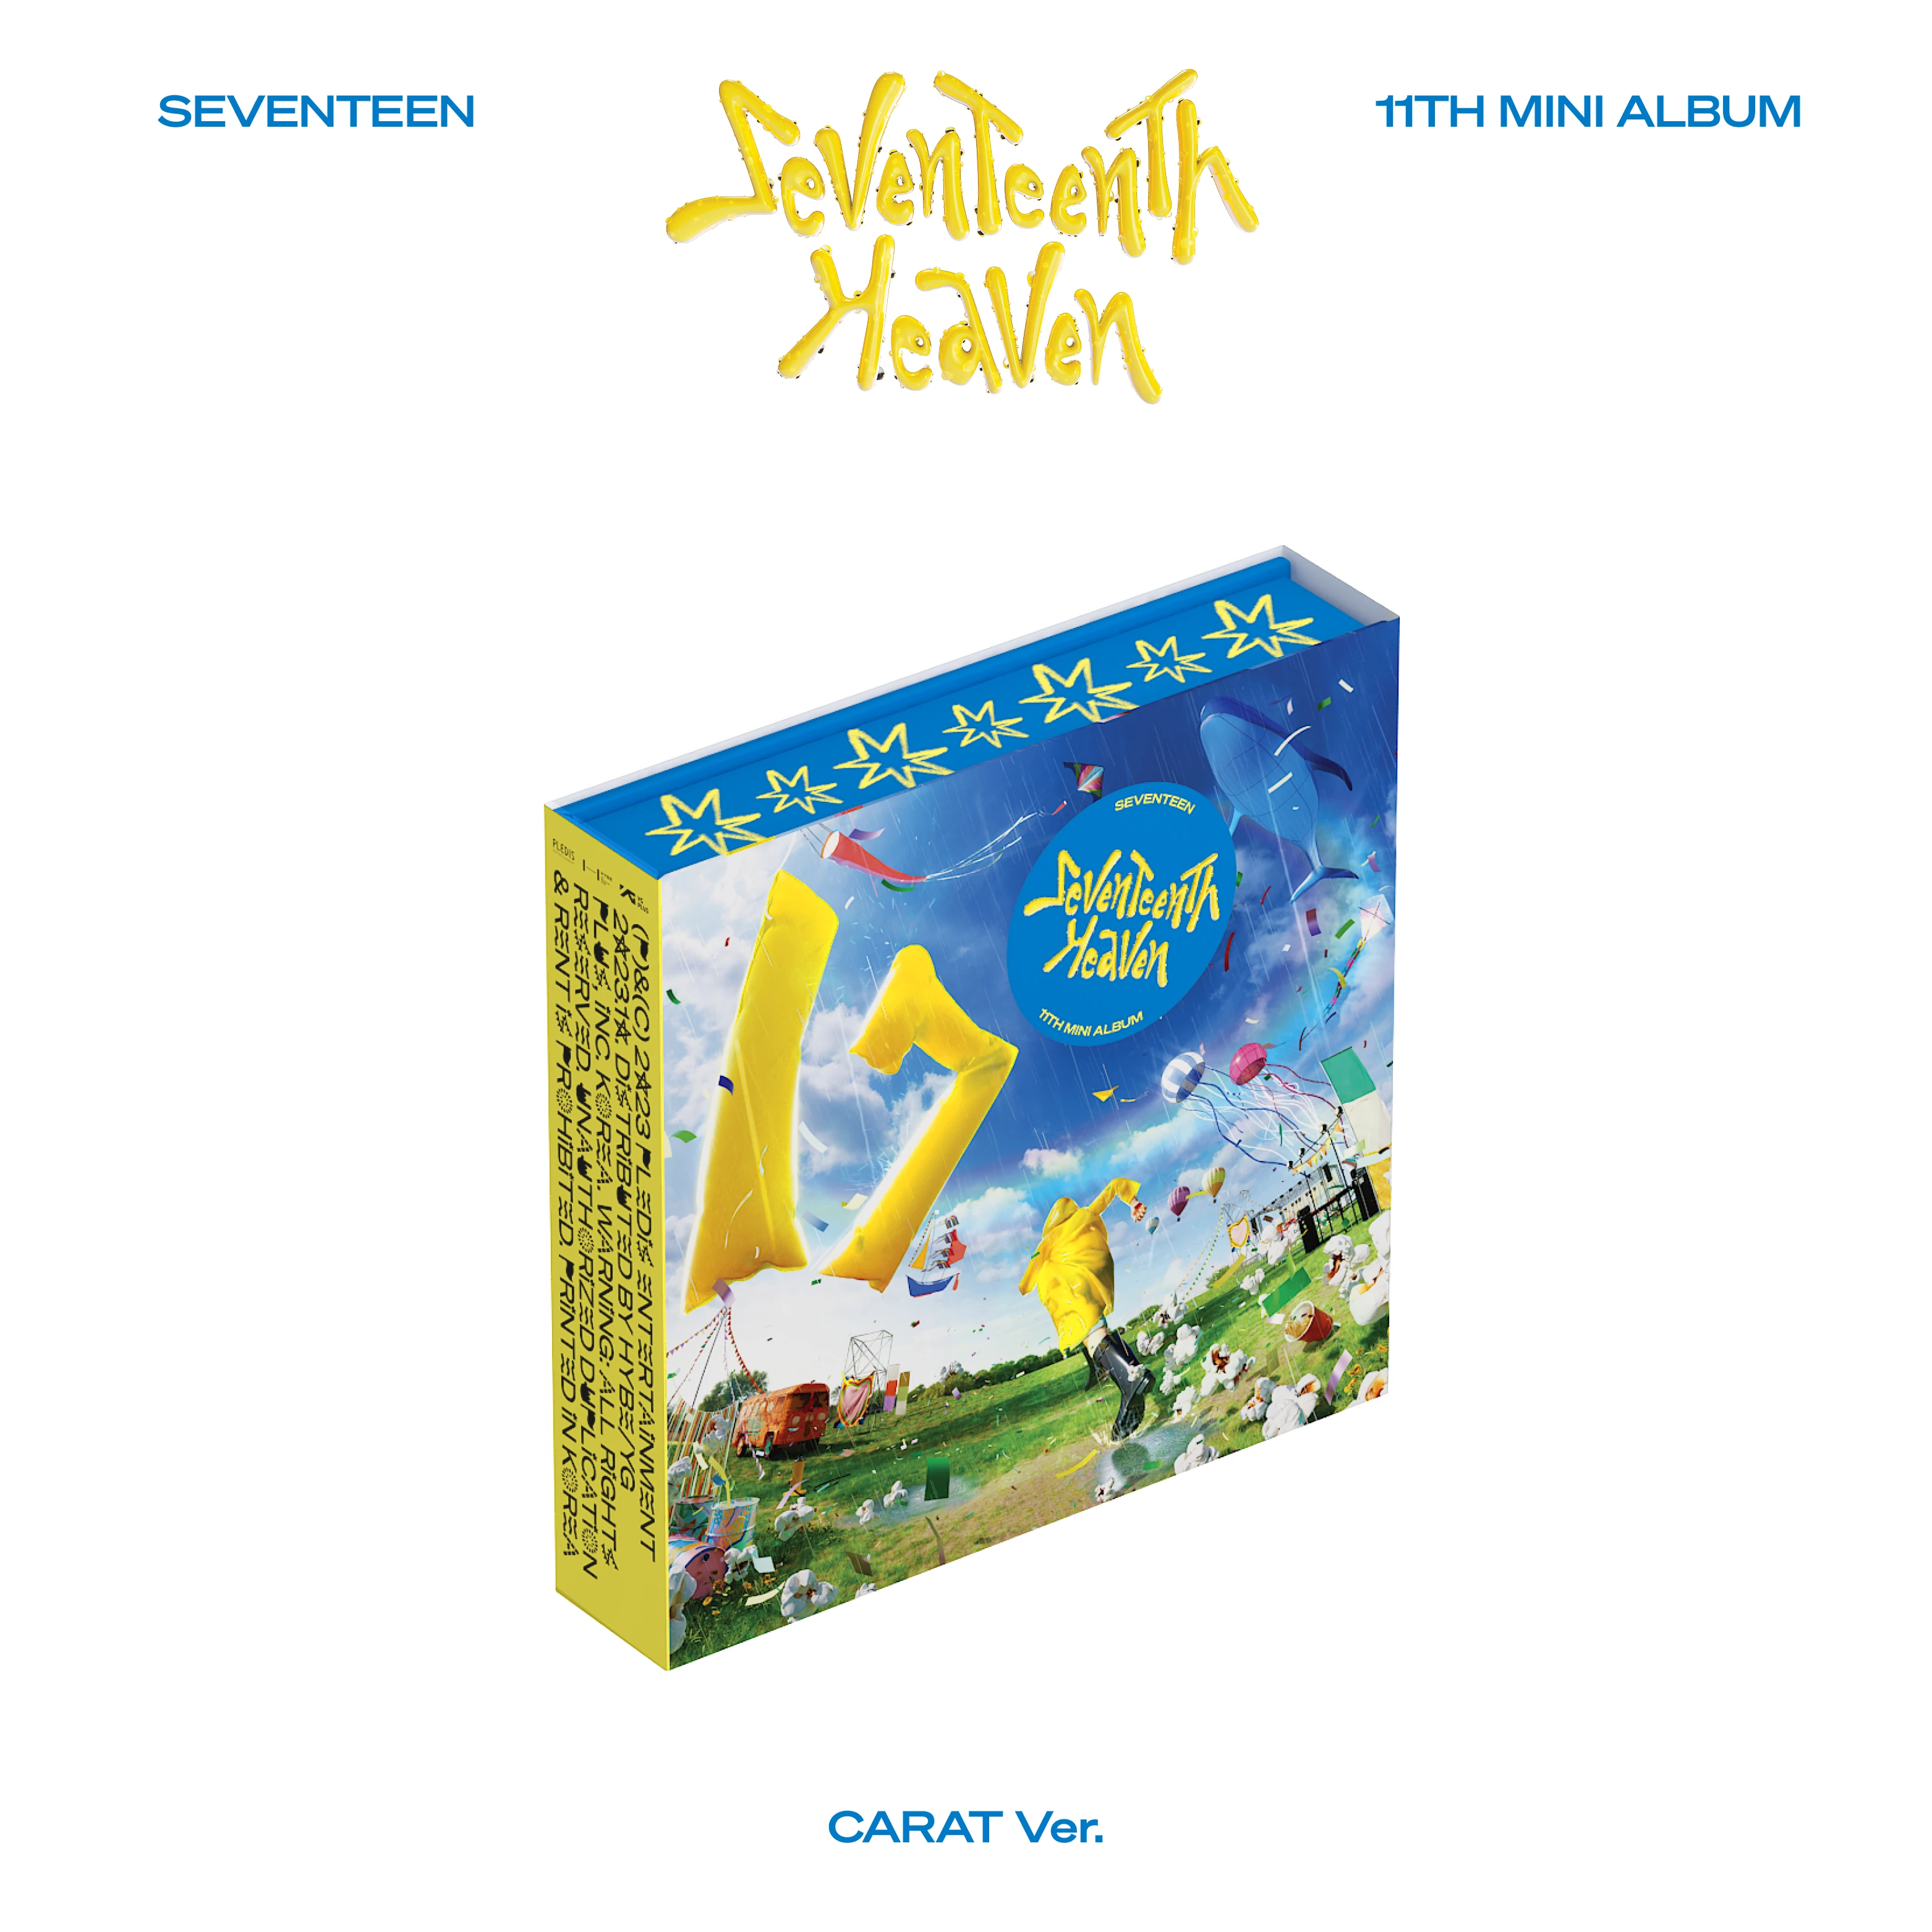 seventeen-11th-mini-album-seventeenth-heaven-carat-ver-13-versions-random-makestar